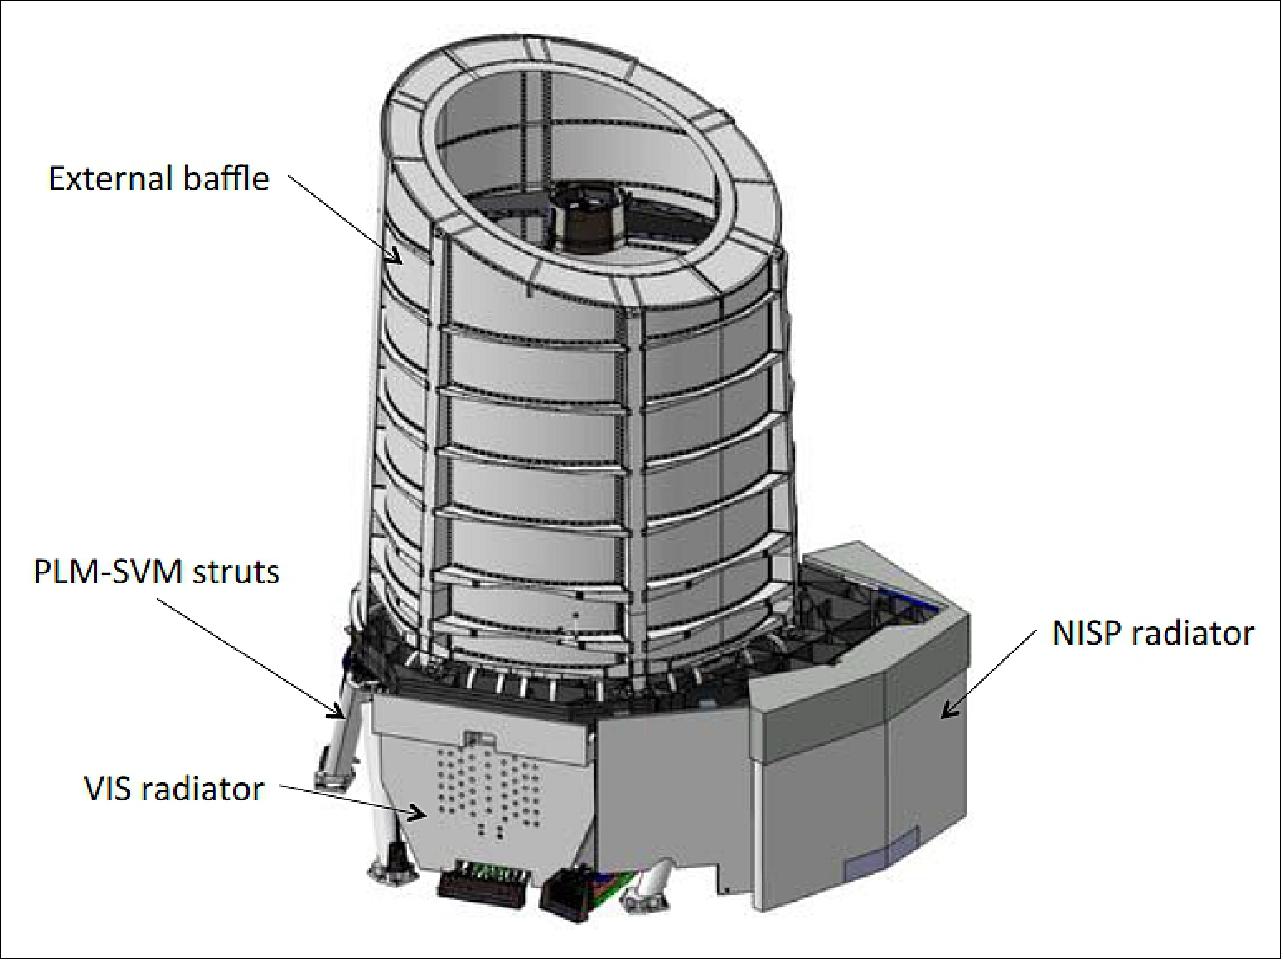 Figure 14: External front view of the PLM (image credit: Euclid Consortium)